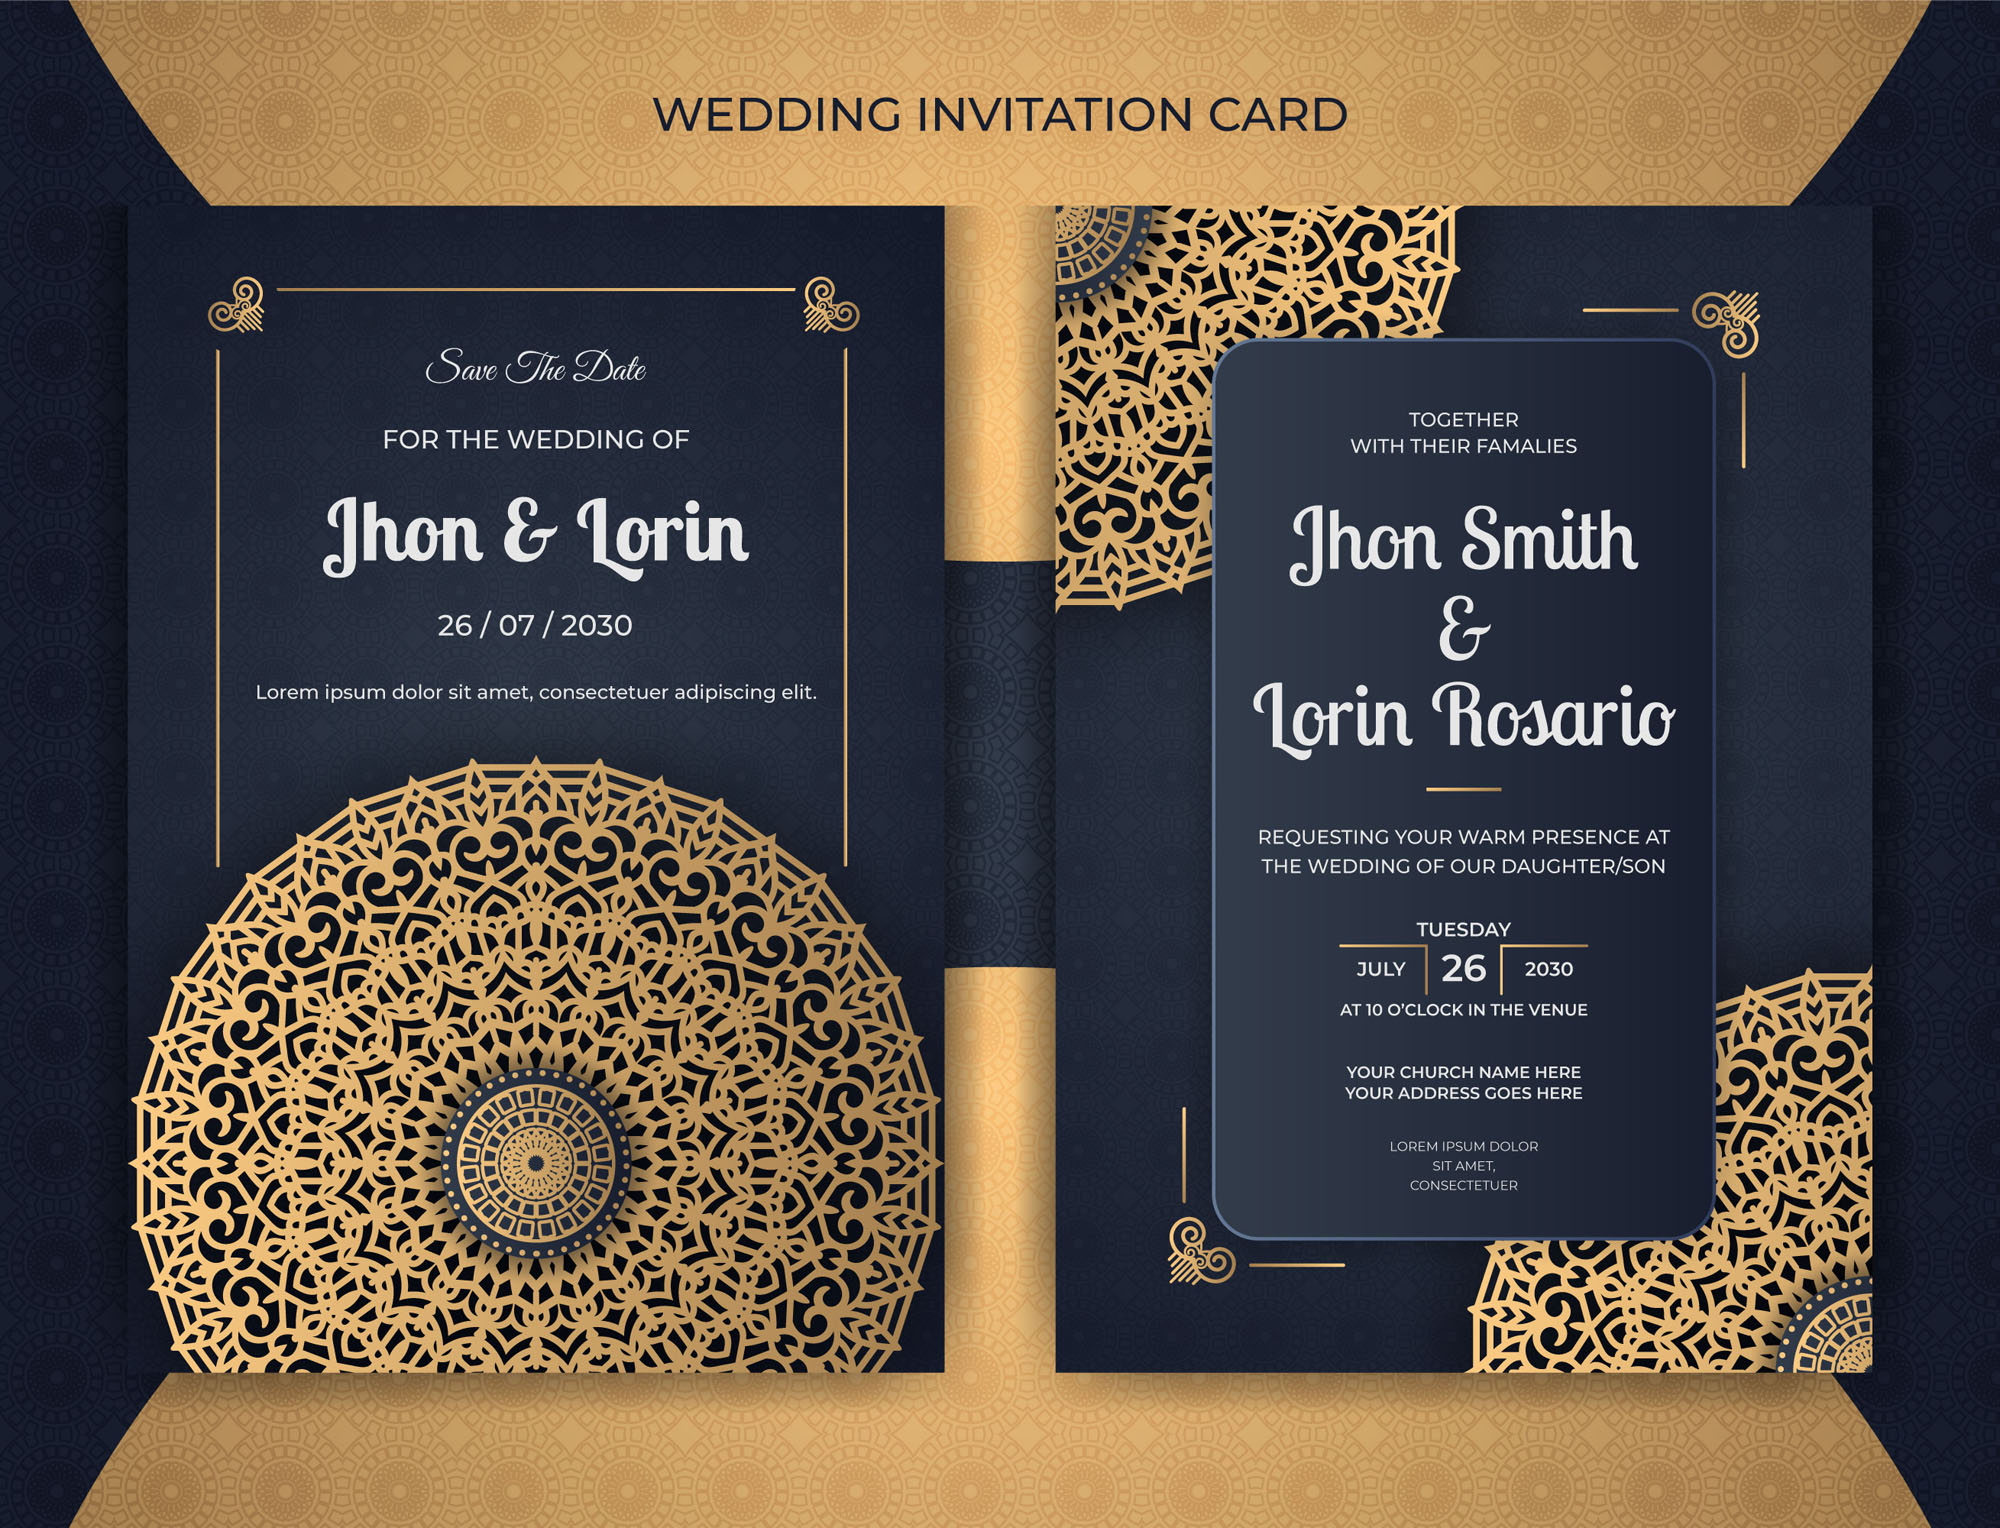 royal wedding invitations